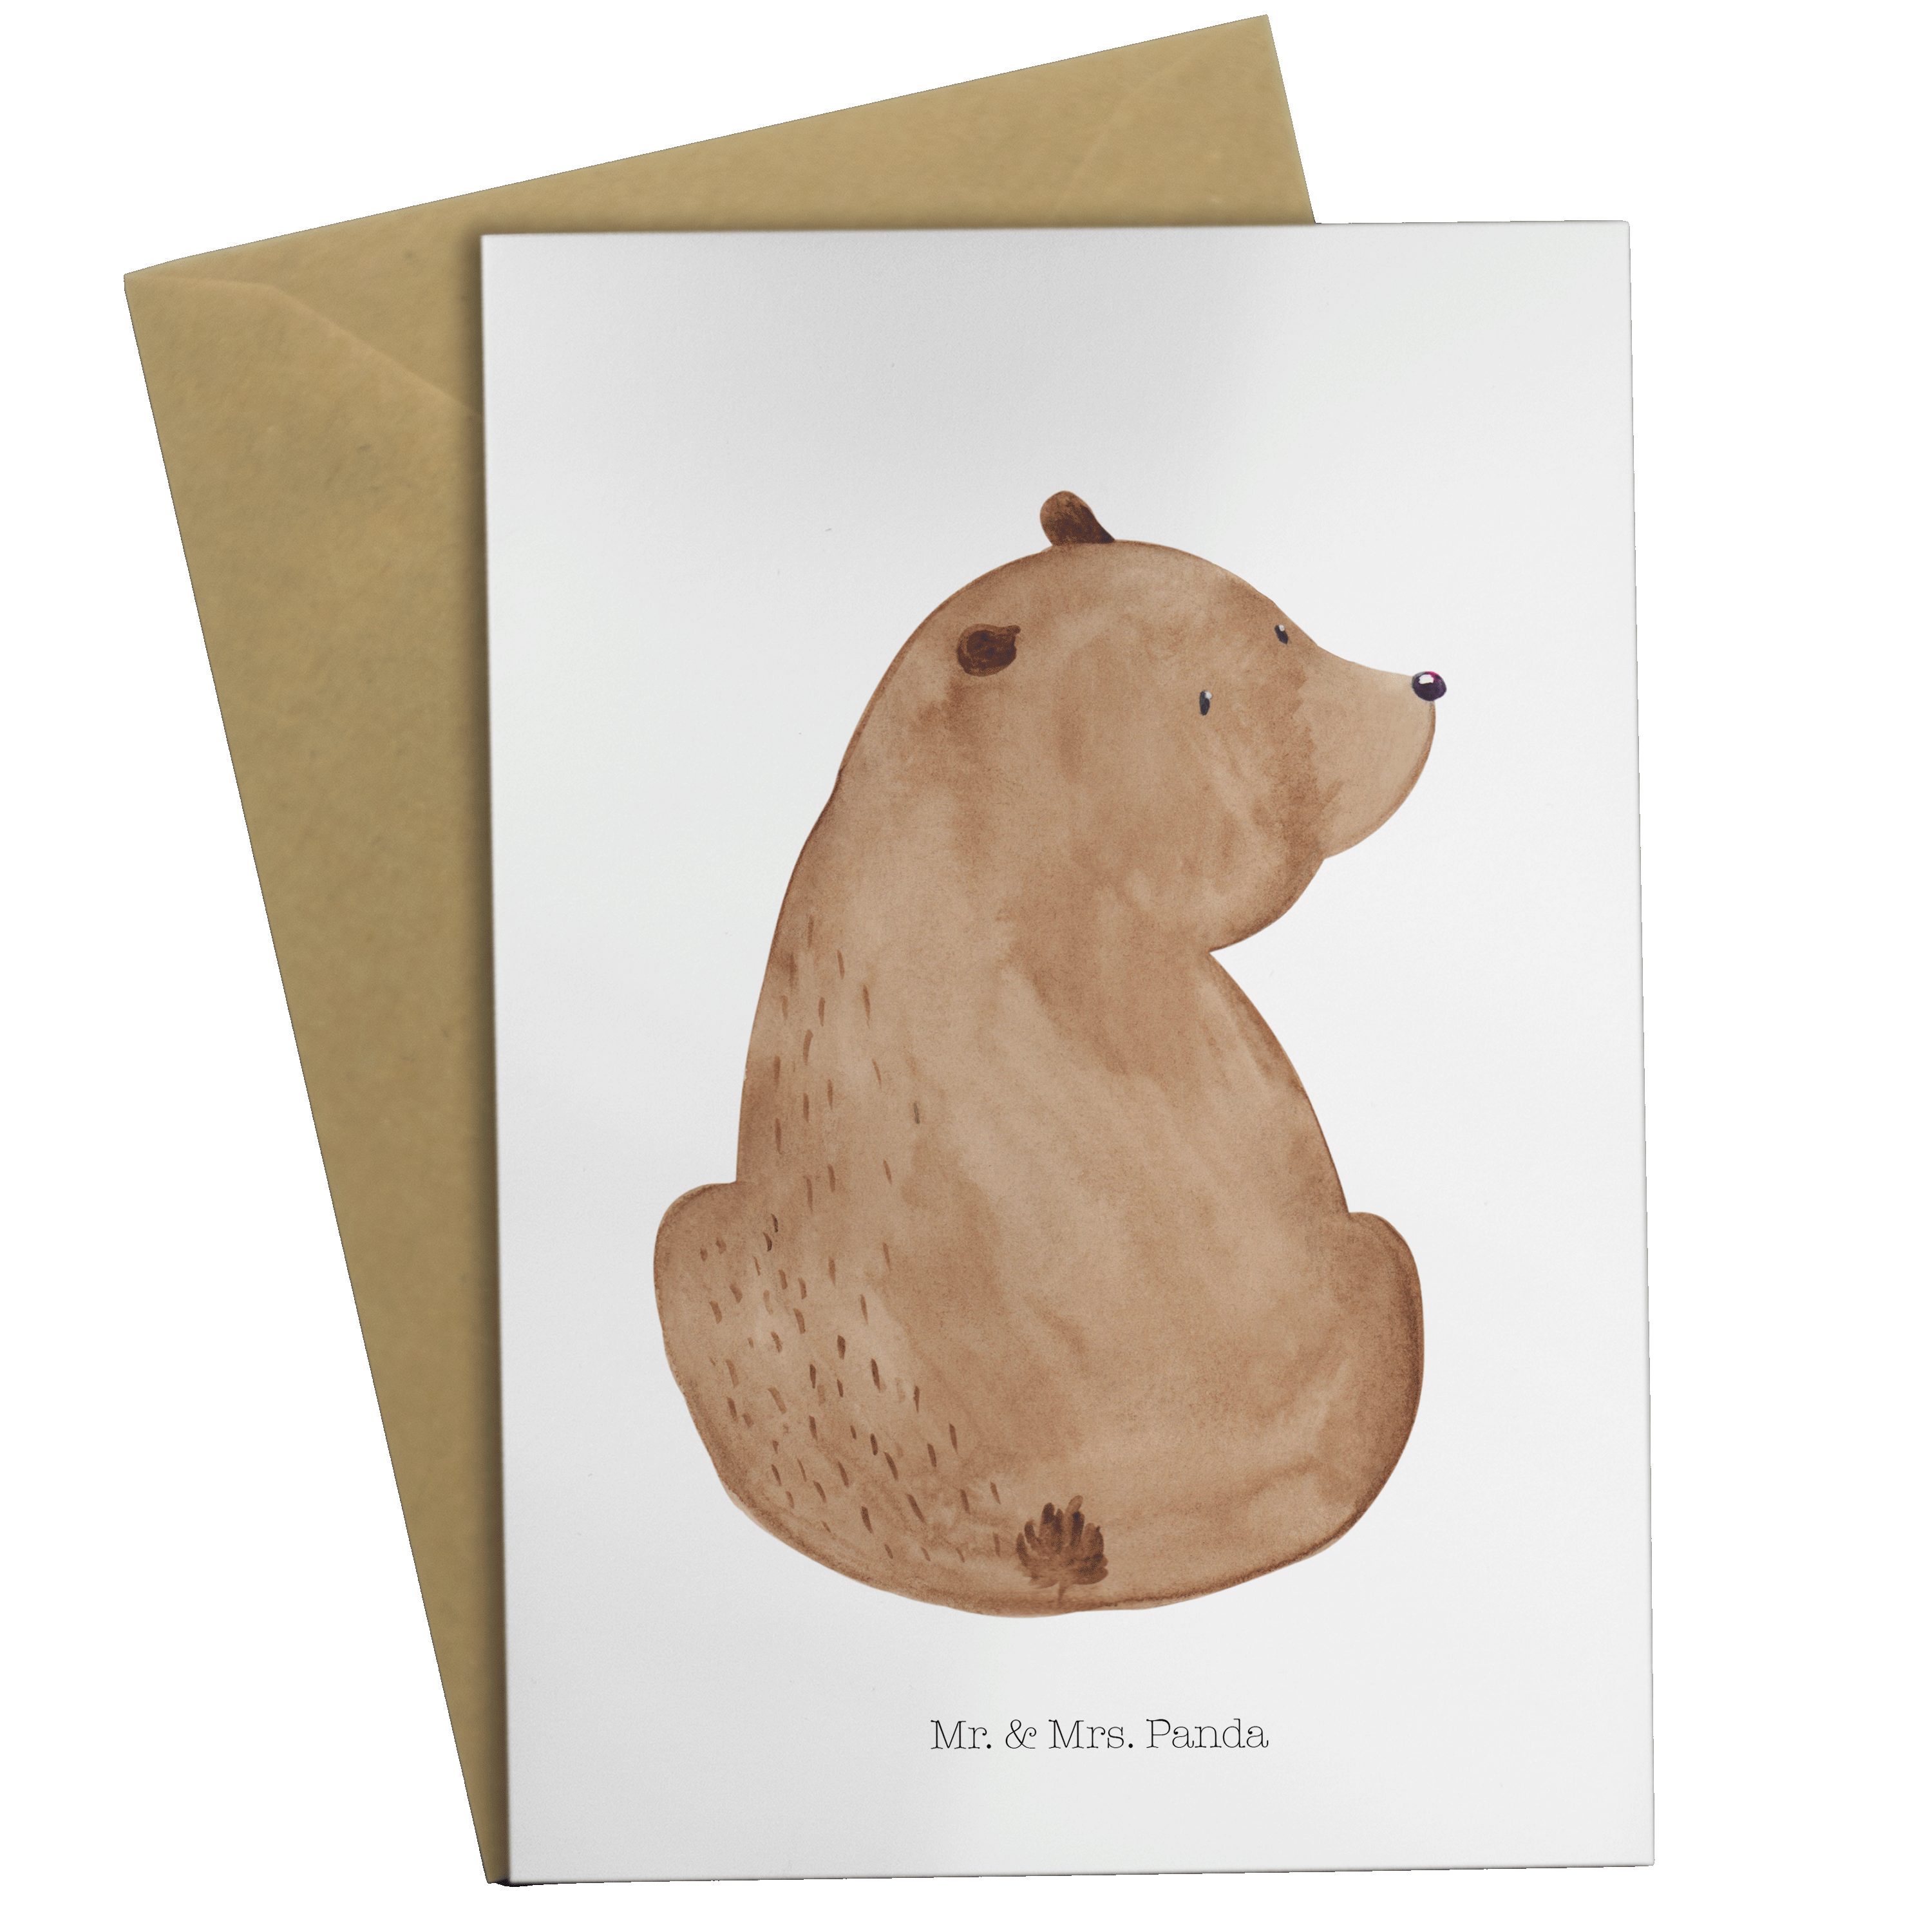 Mr. & Mrs. Panda Grußkarte Bär Schulterblick - Weiß - Geschenk, Teddy, Einladungskarte, Teddybär | Grußkarten